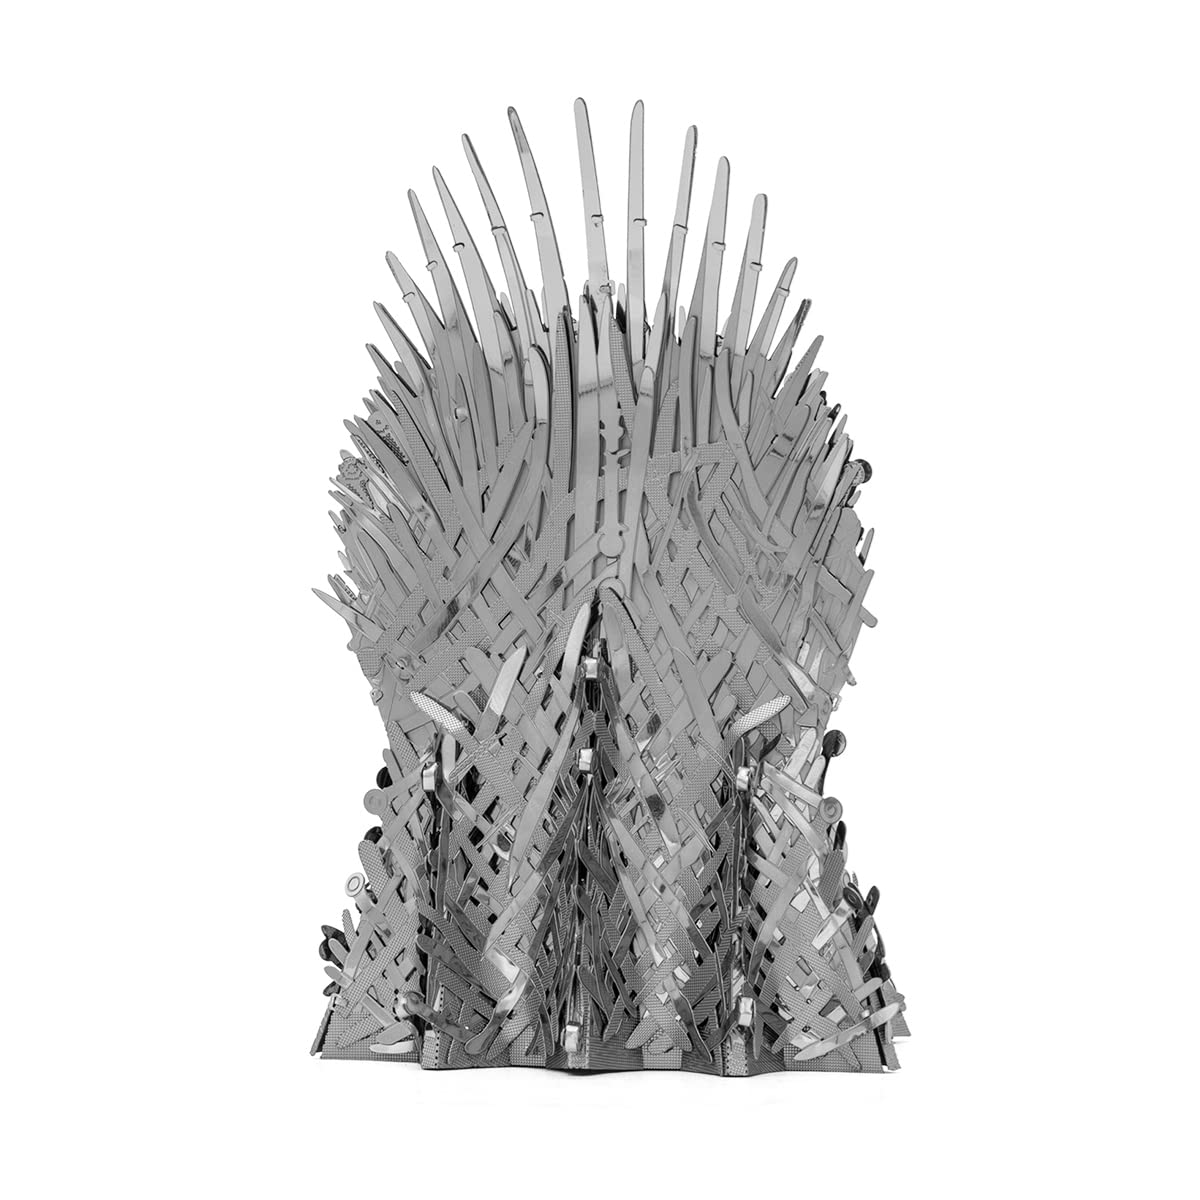 Metal Earth Premium Series Game of Thrones Iron Throne 3D Metal Model Kit Bundle with Tweezers Fascinations